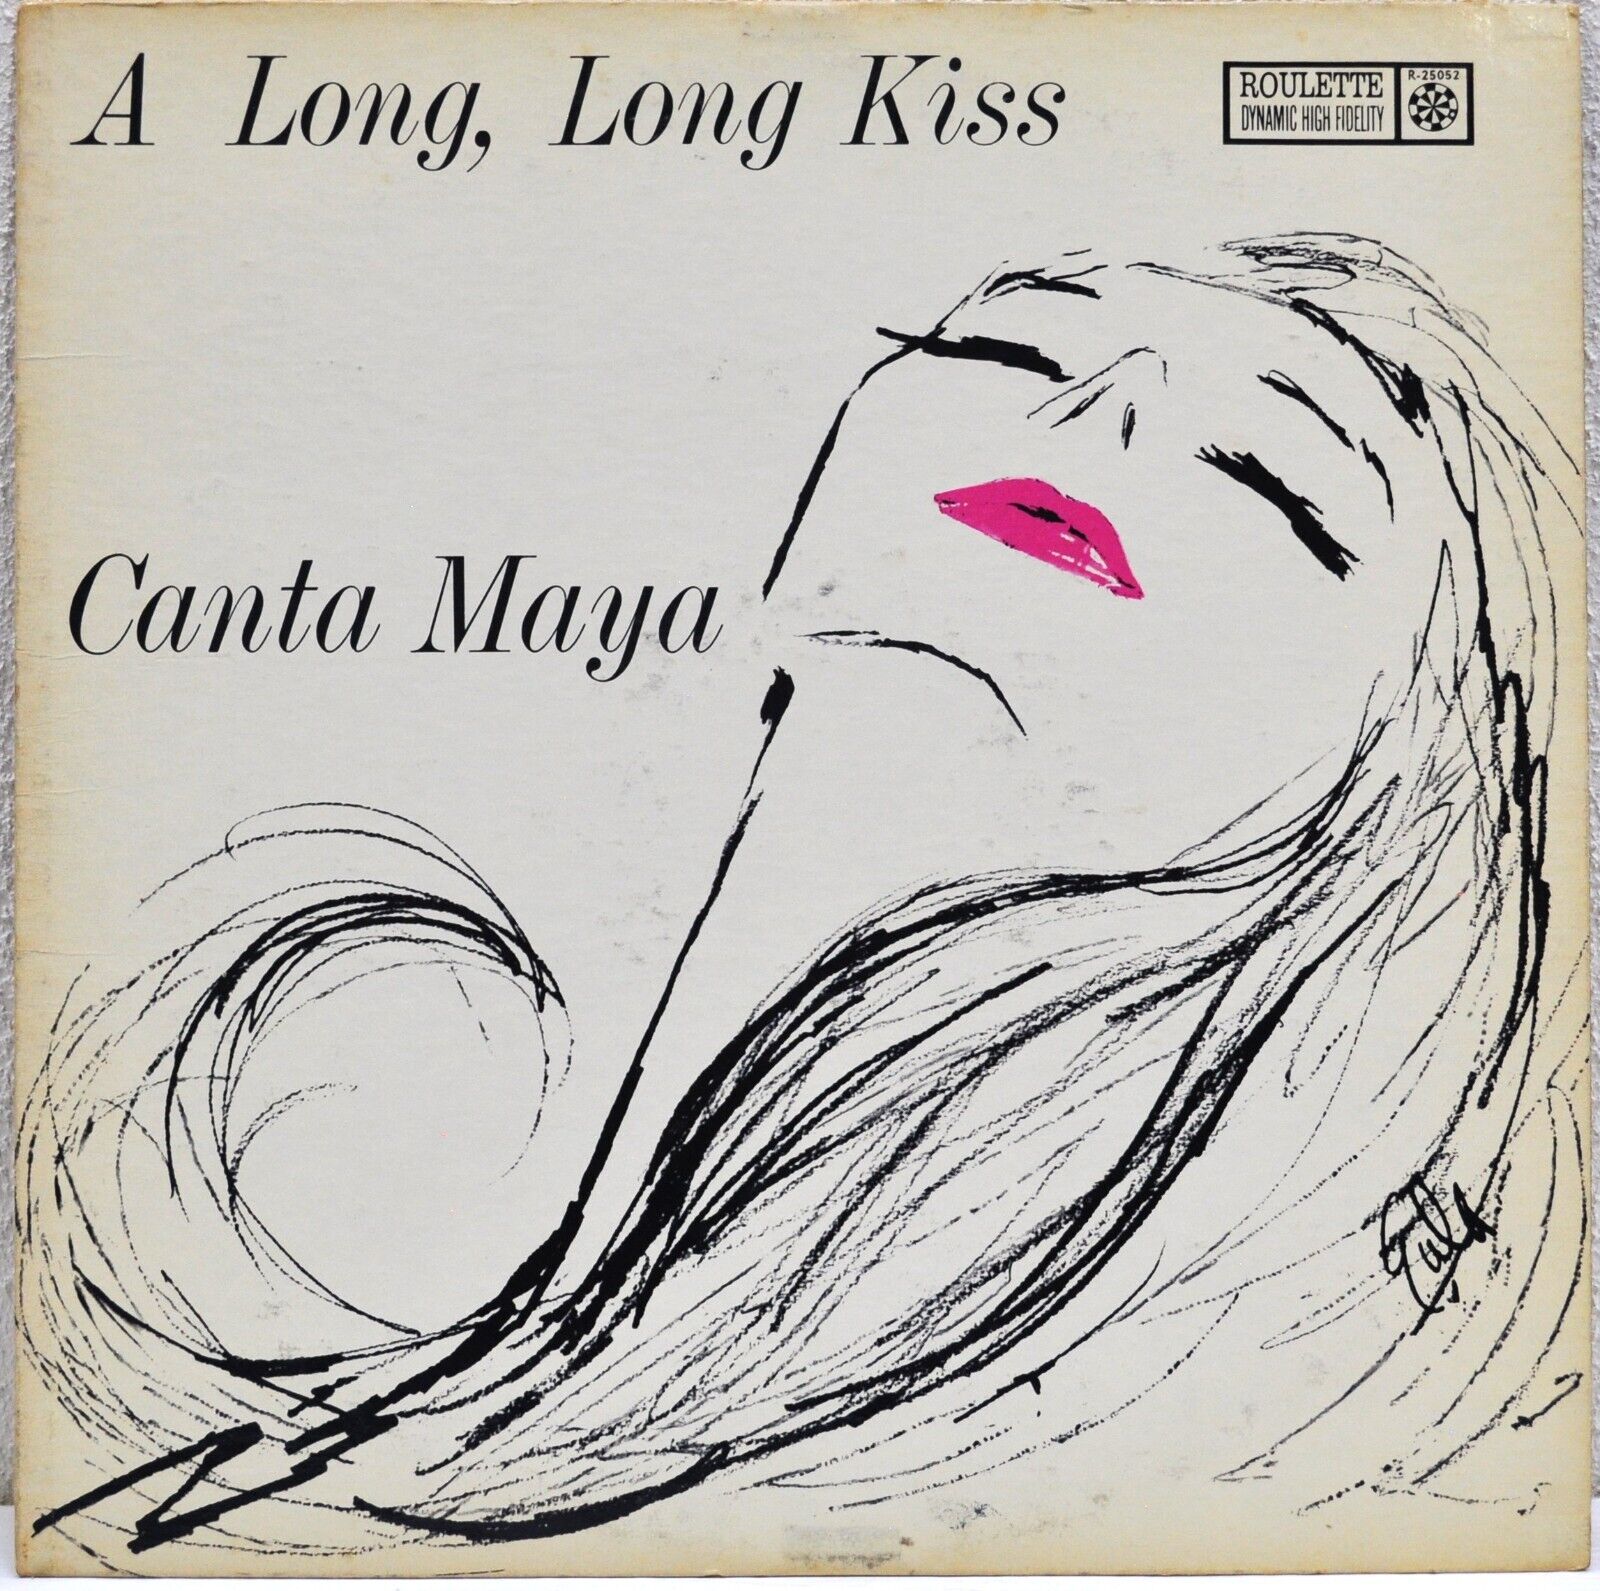 CANTA MAYA  "A Long, Long Kiss"   1956  Vinyl LP   Roulette  R-25052